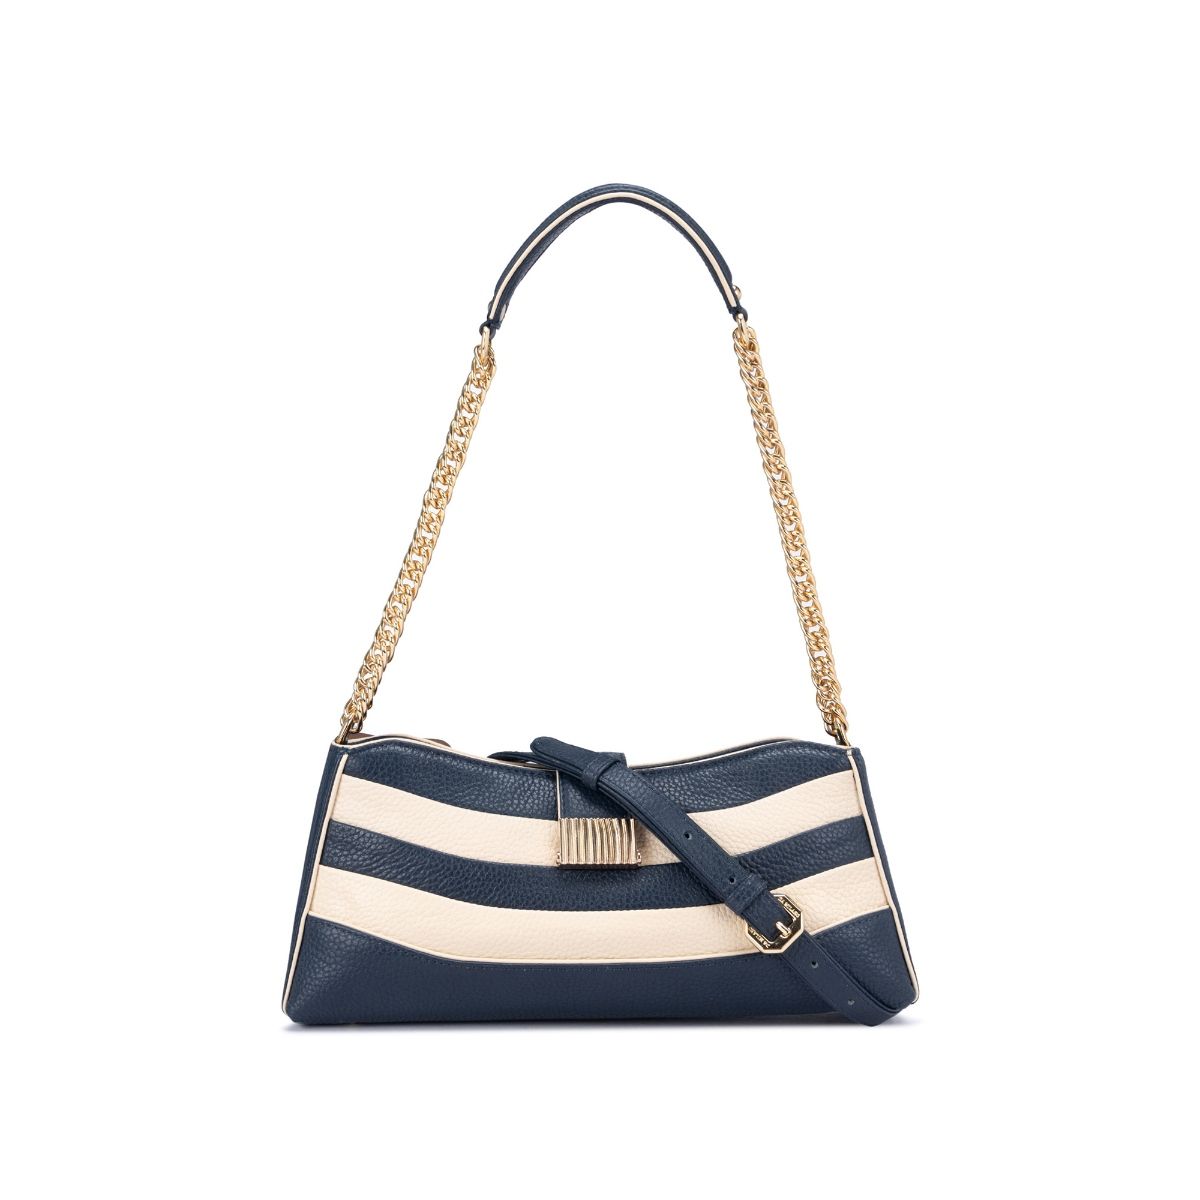 vtg dolce gabbana handbag blue and white stripes see pics for damage to  handles | eBay